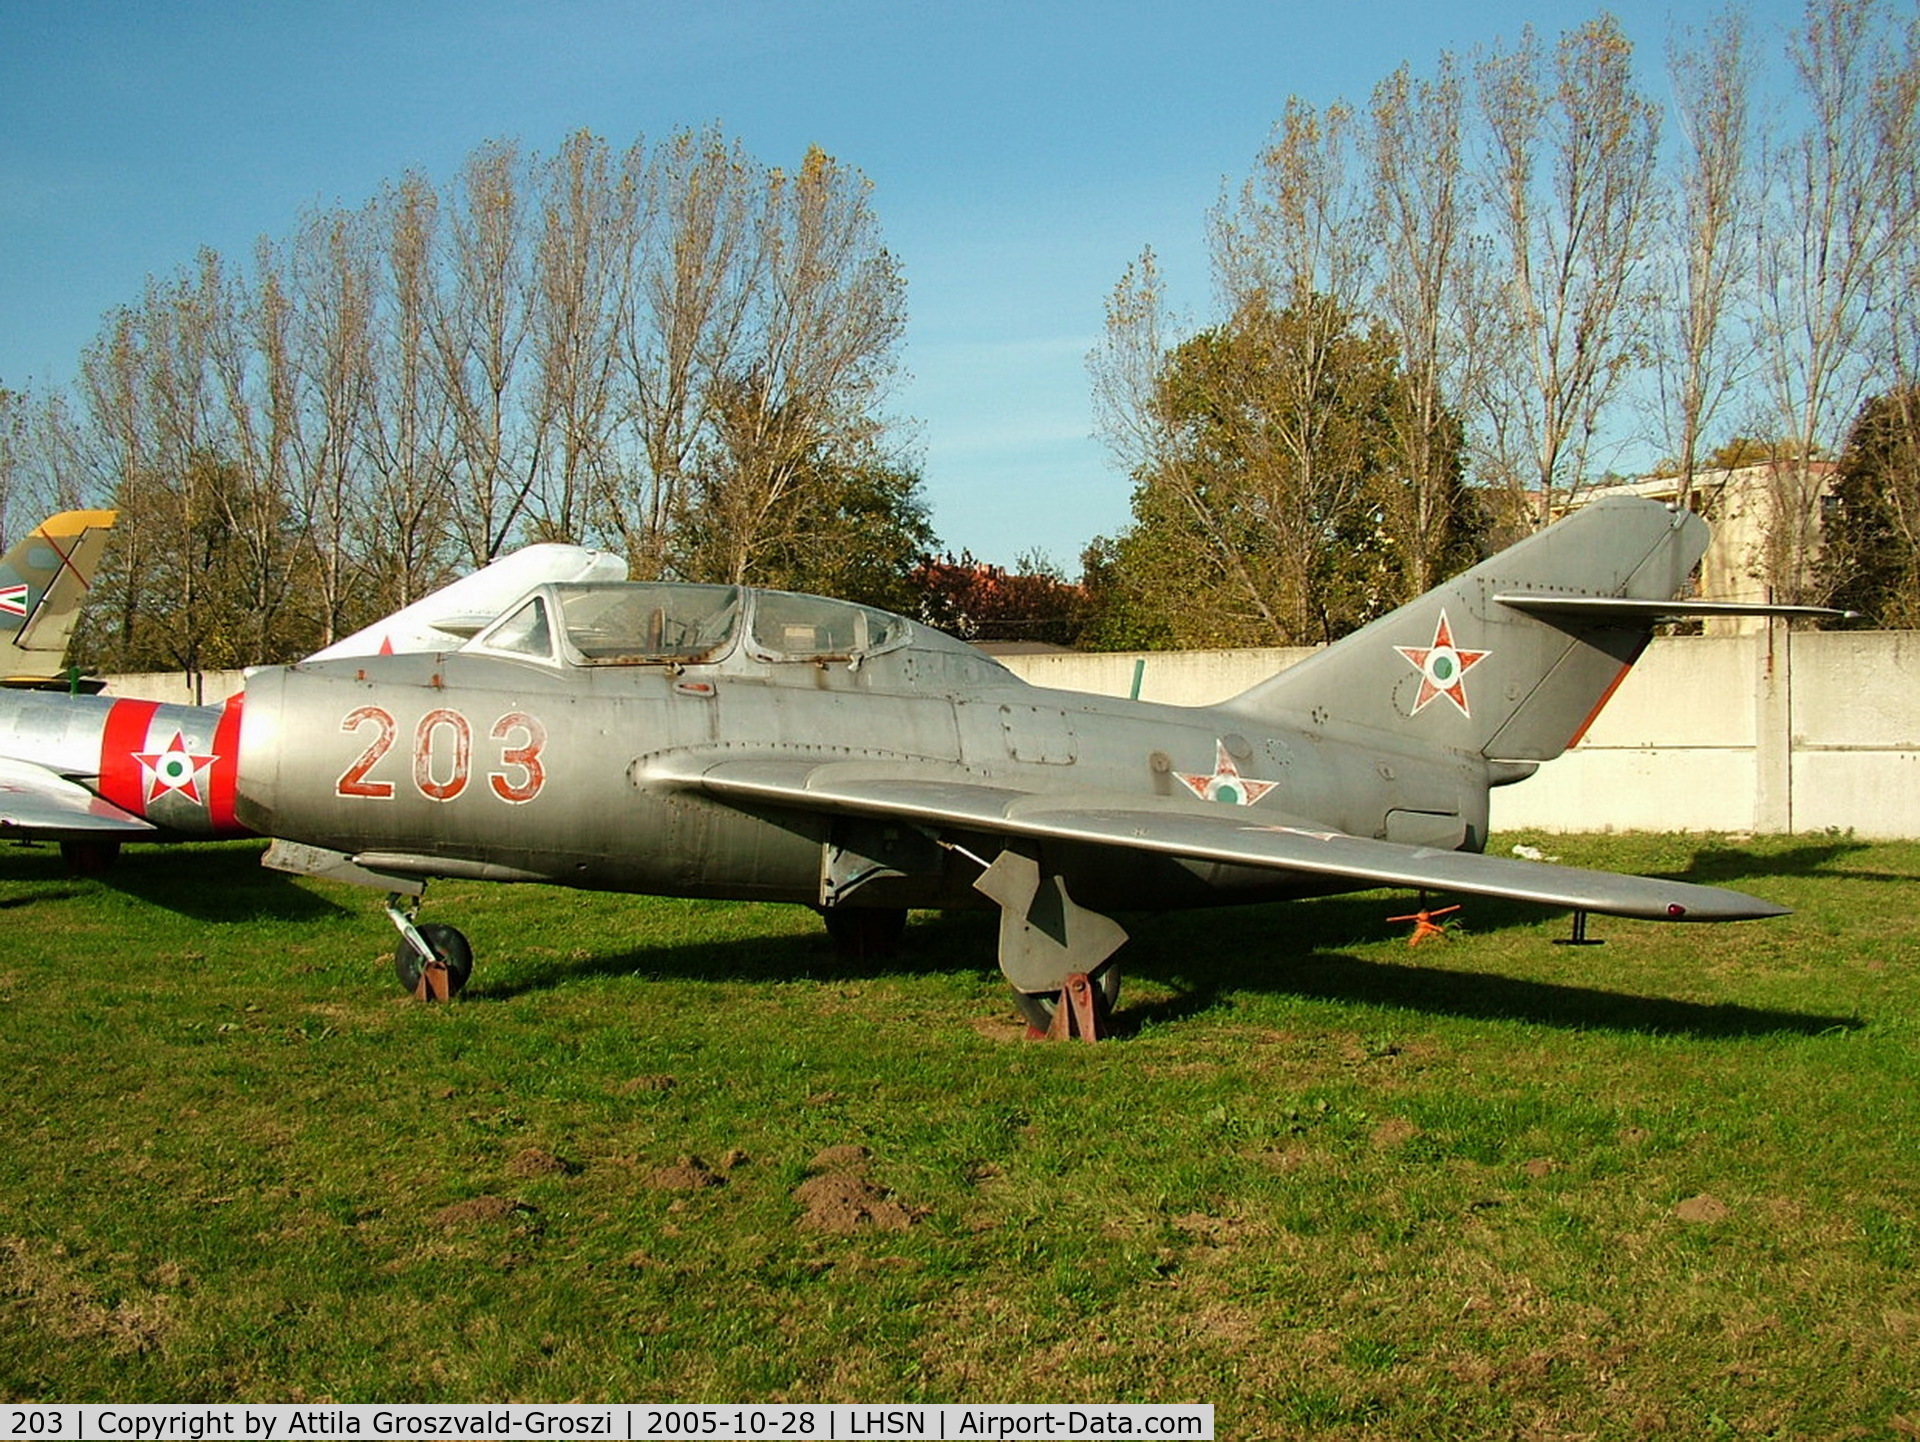 203, 1955 Mikoyan-Gurevich MiG-15UTI C/N 10993203, Szolnok airplane museum, Hungary